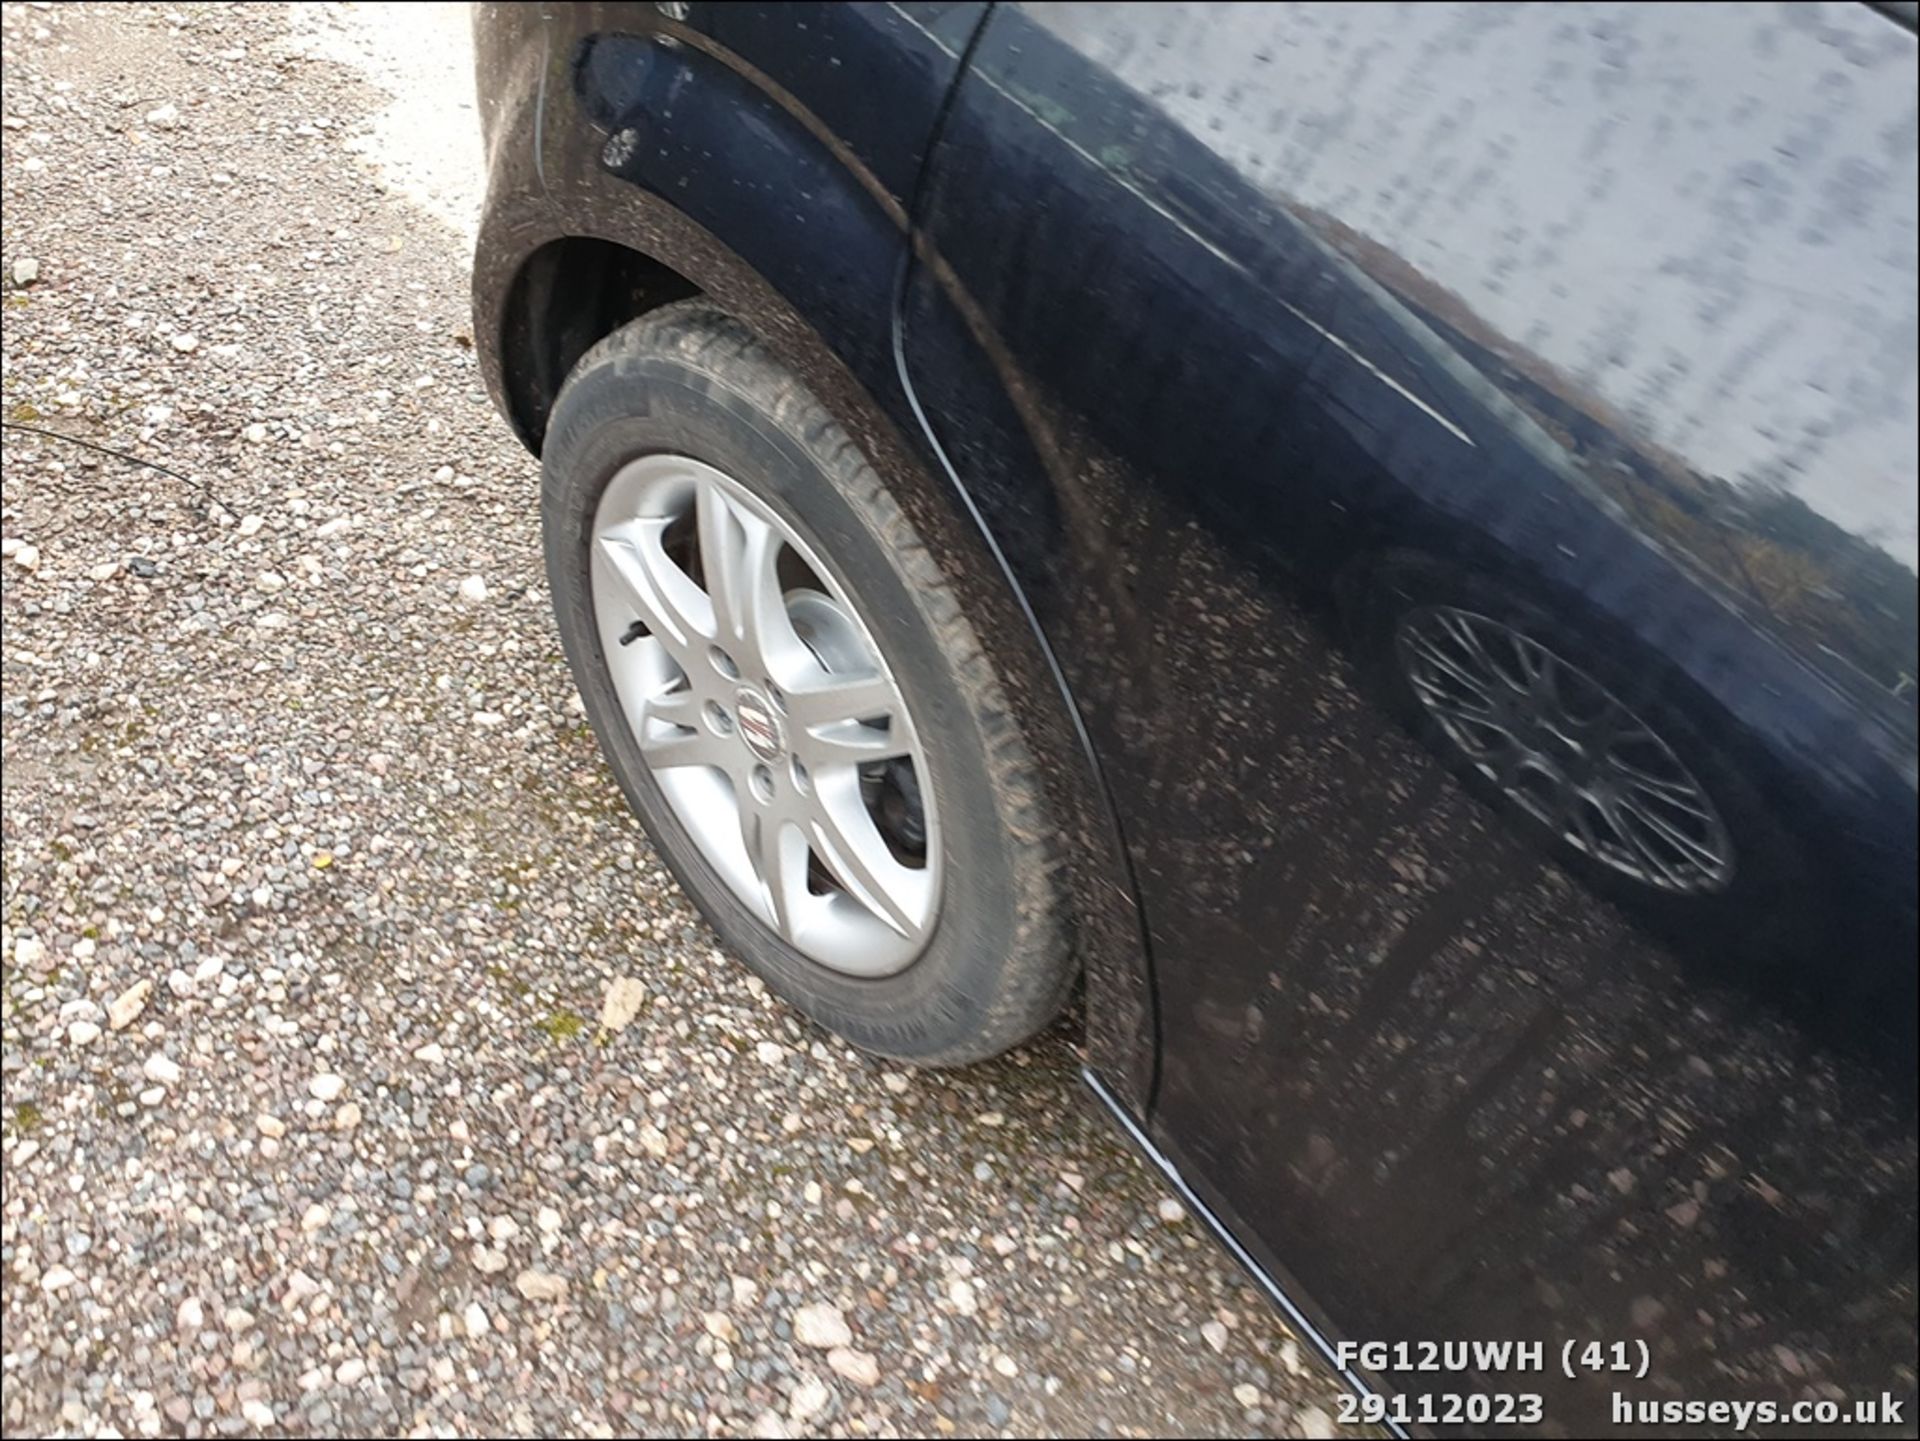 12/12 SEAT LEON S COPA CR TDI ECOMOT - 1598cc 5dr Hatchback (Black, 122k) - Image 42 of 58